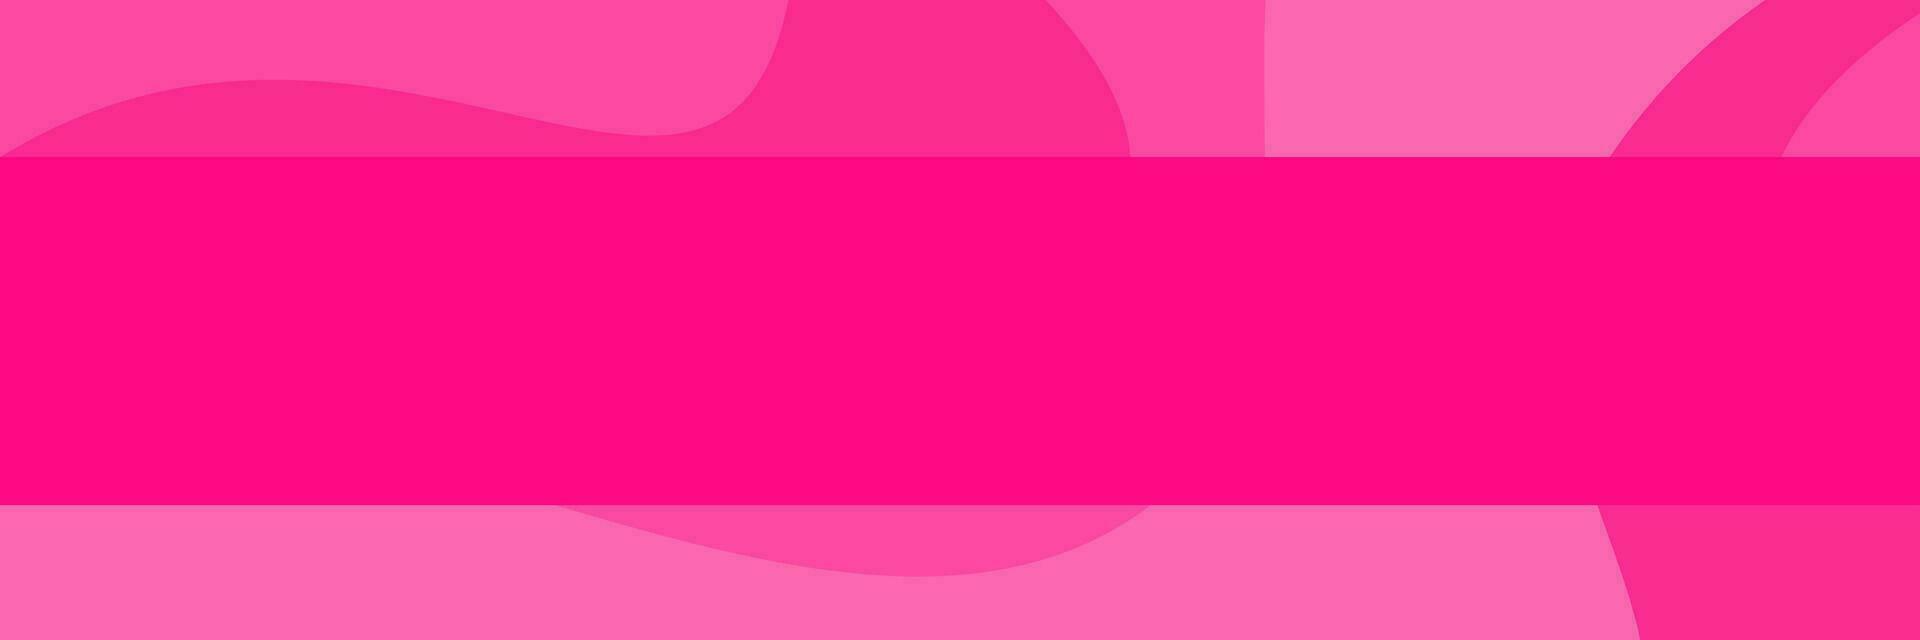 abstract roze achtergrond banier ontwerp vector